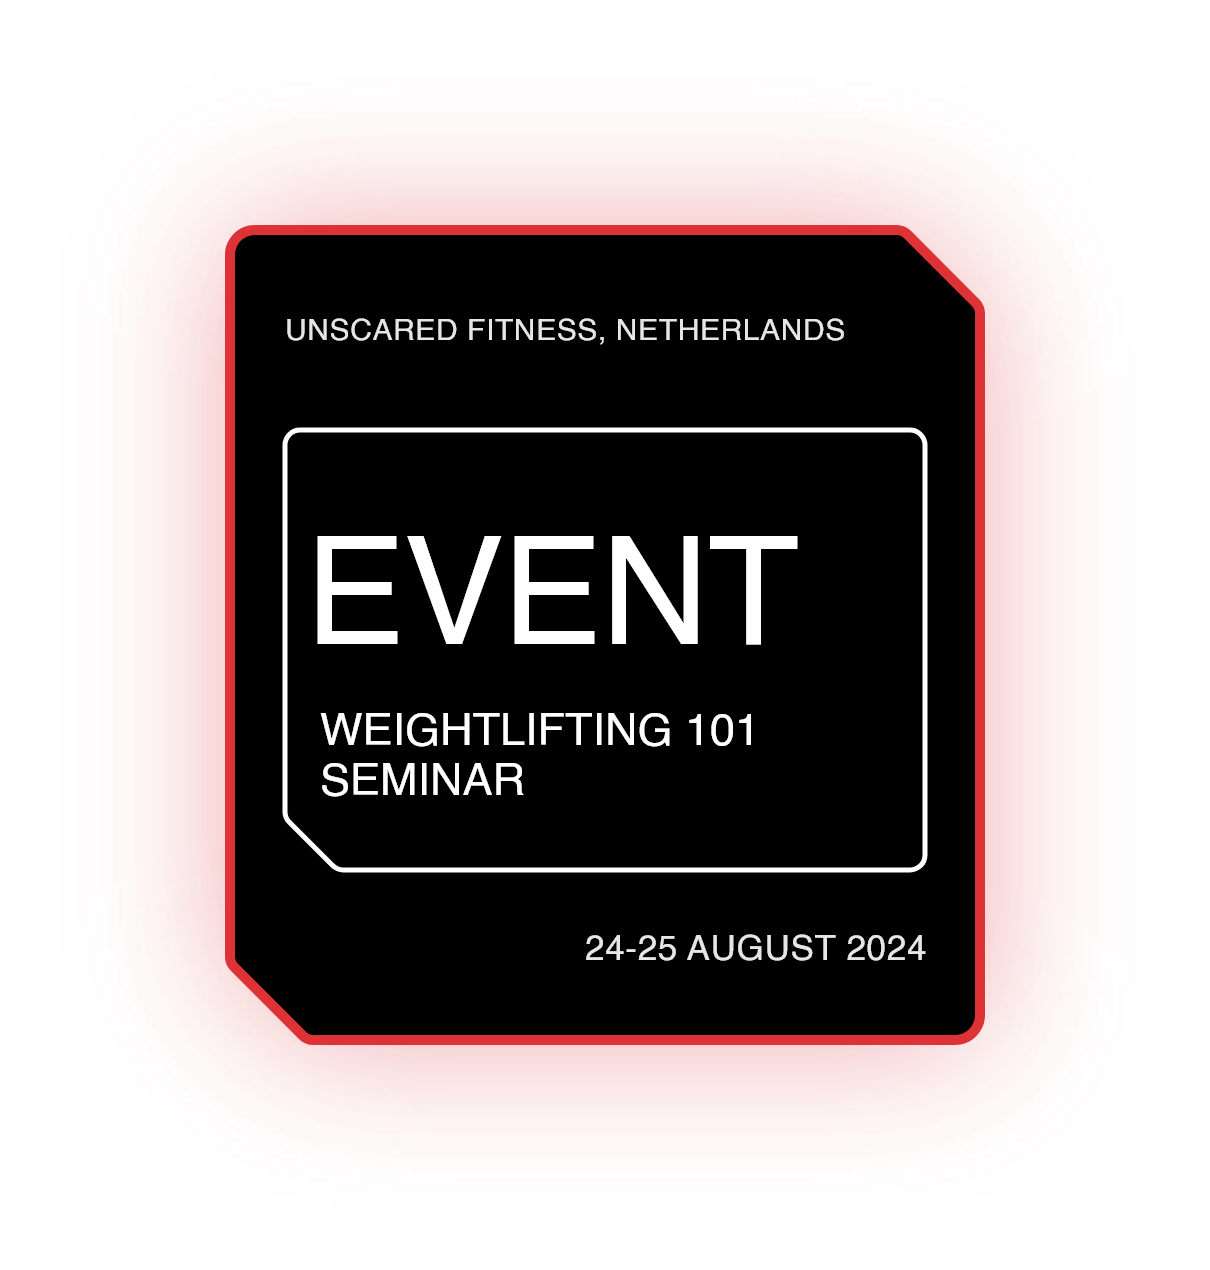 Weightlifting 101 Seminar - Utrecht, Netherlands